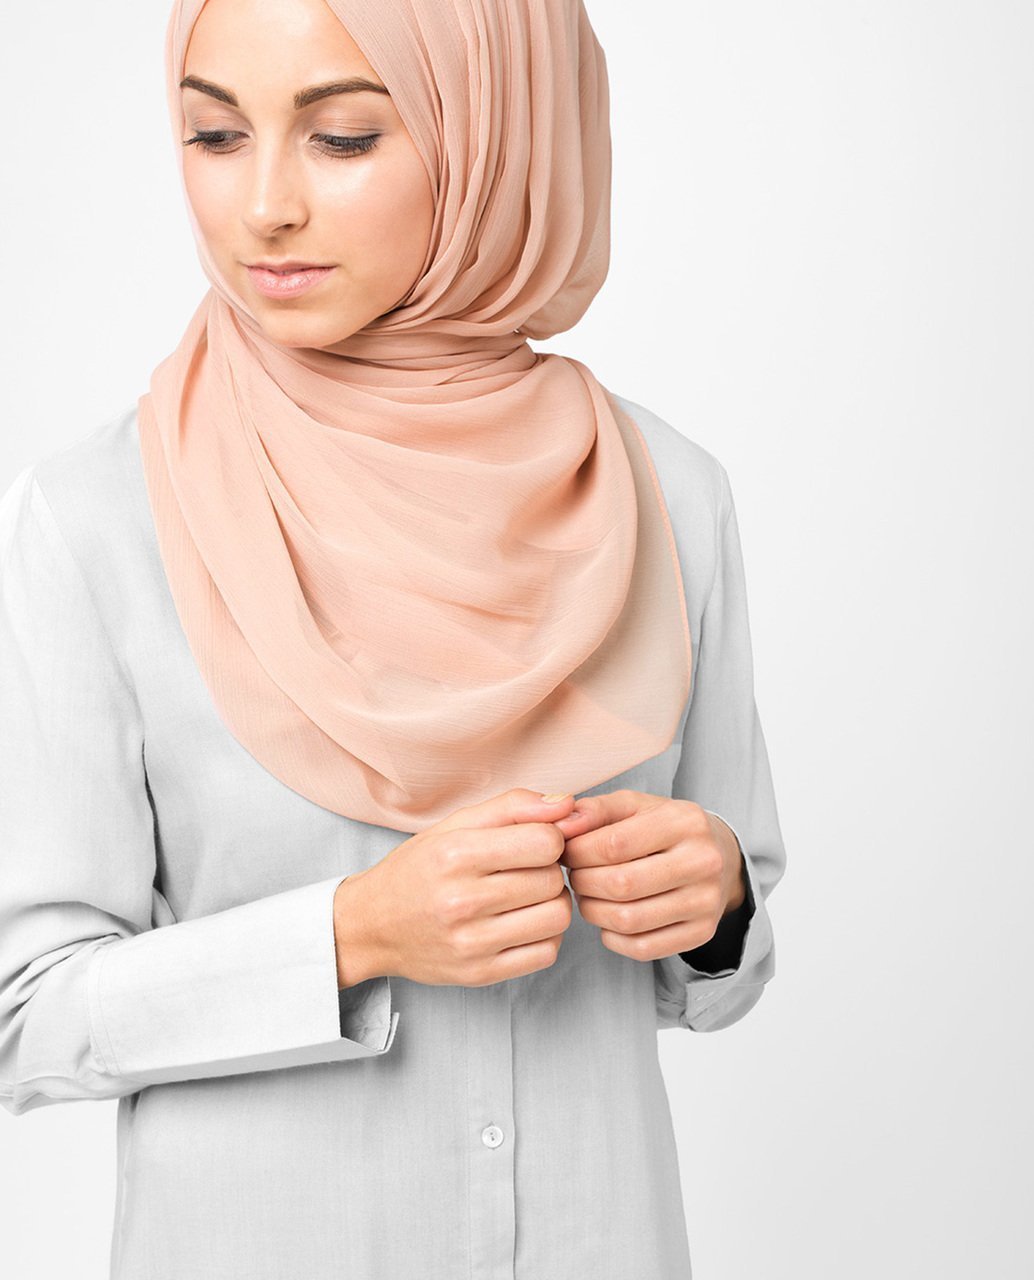 Silk Hijabs